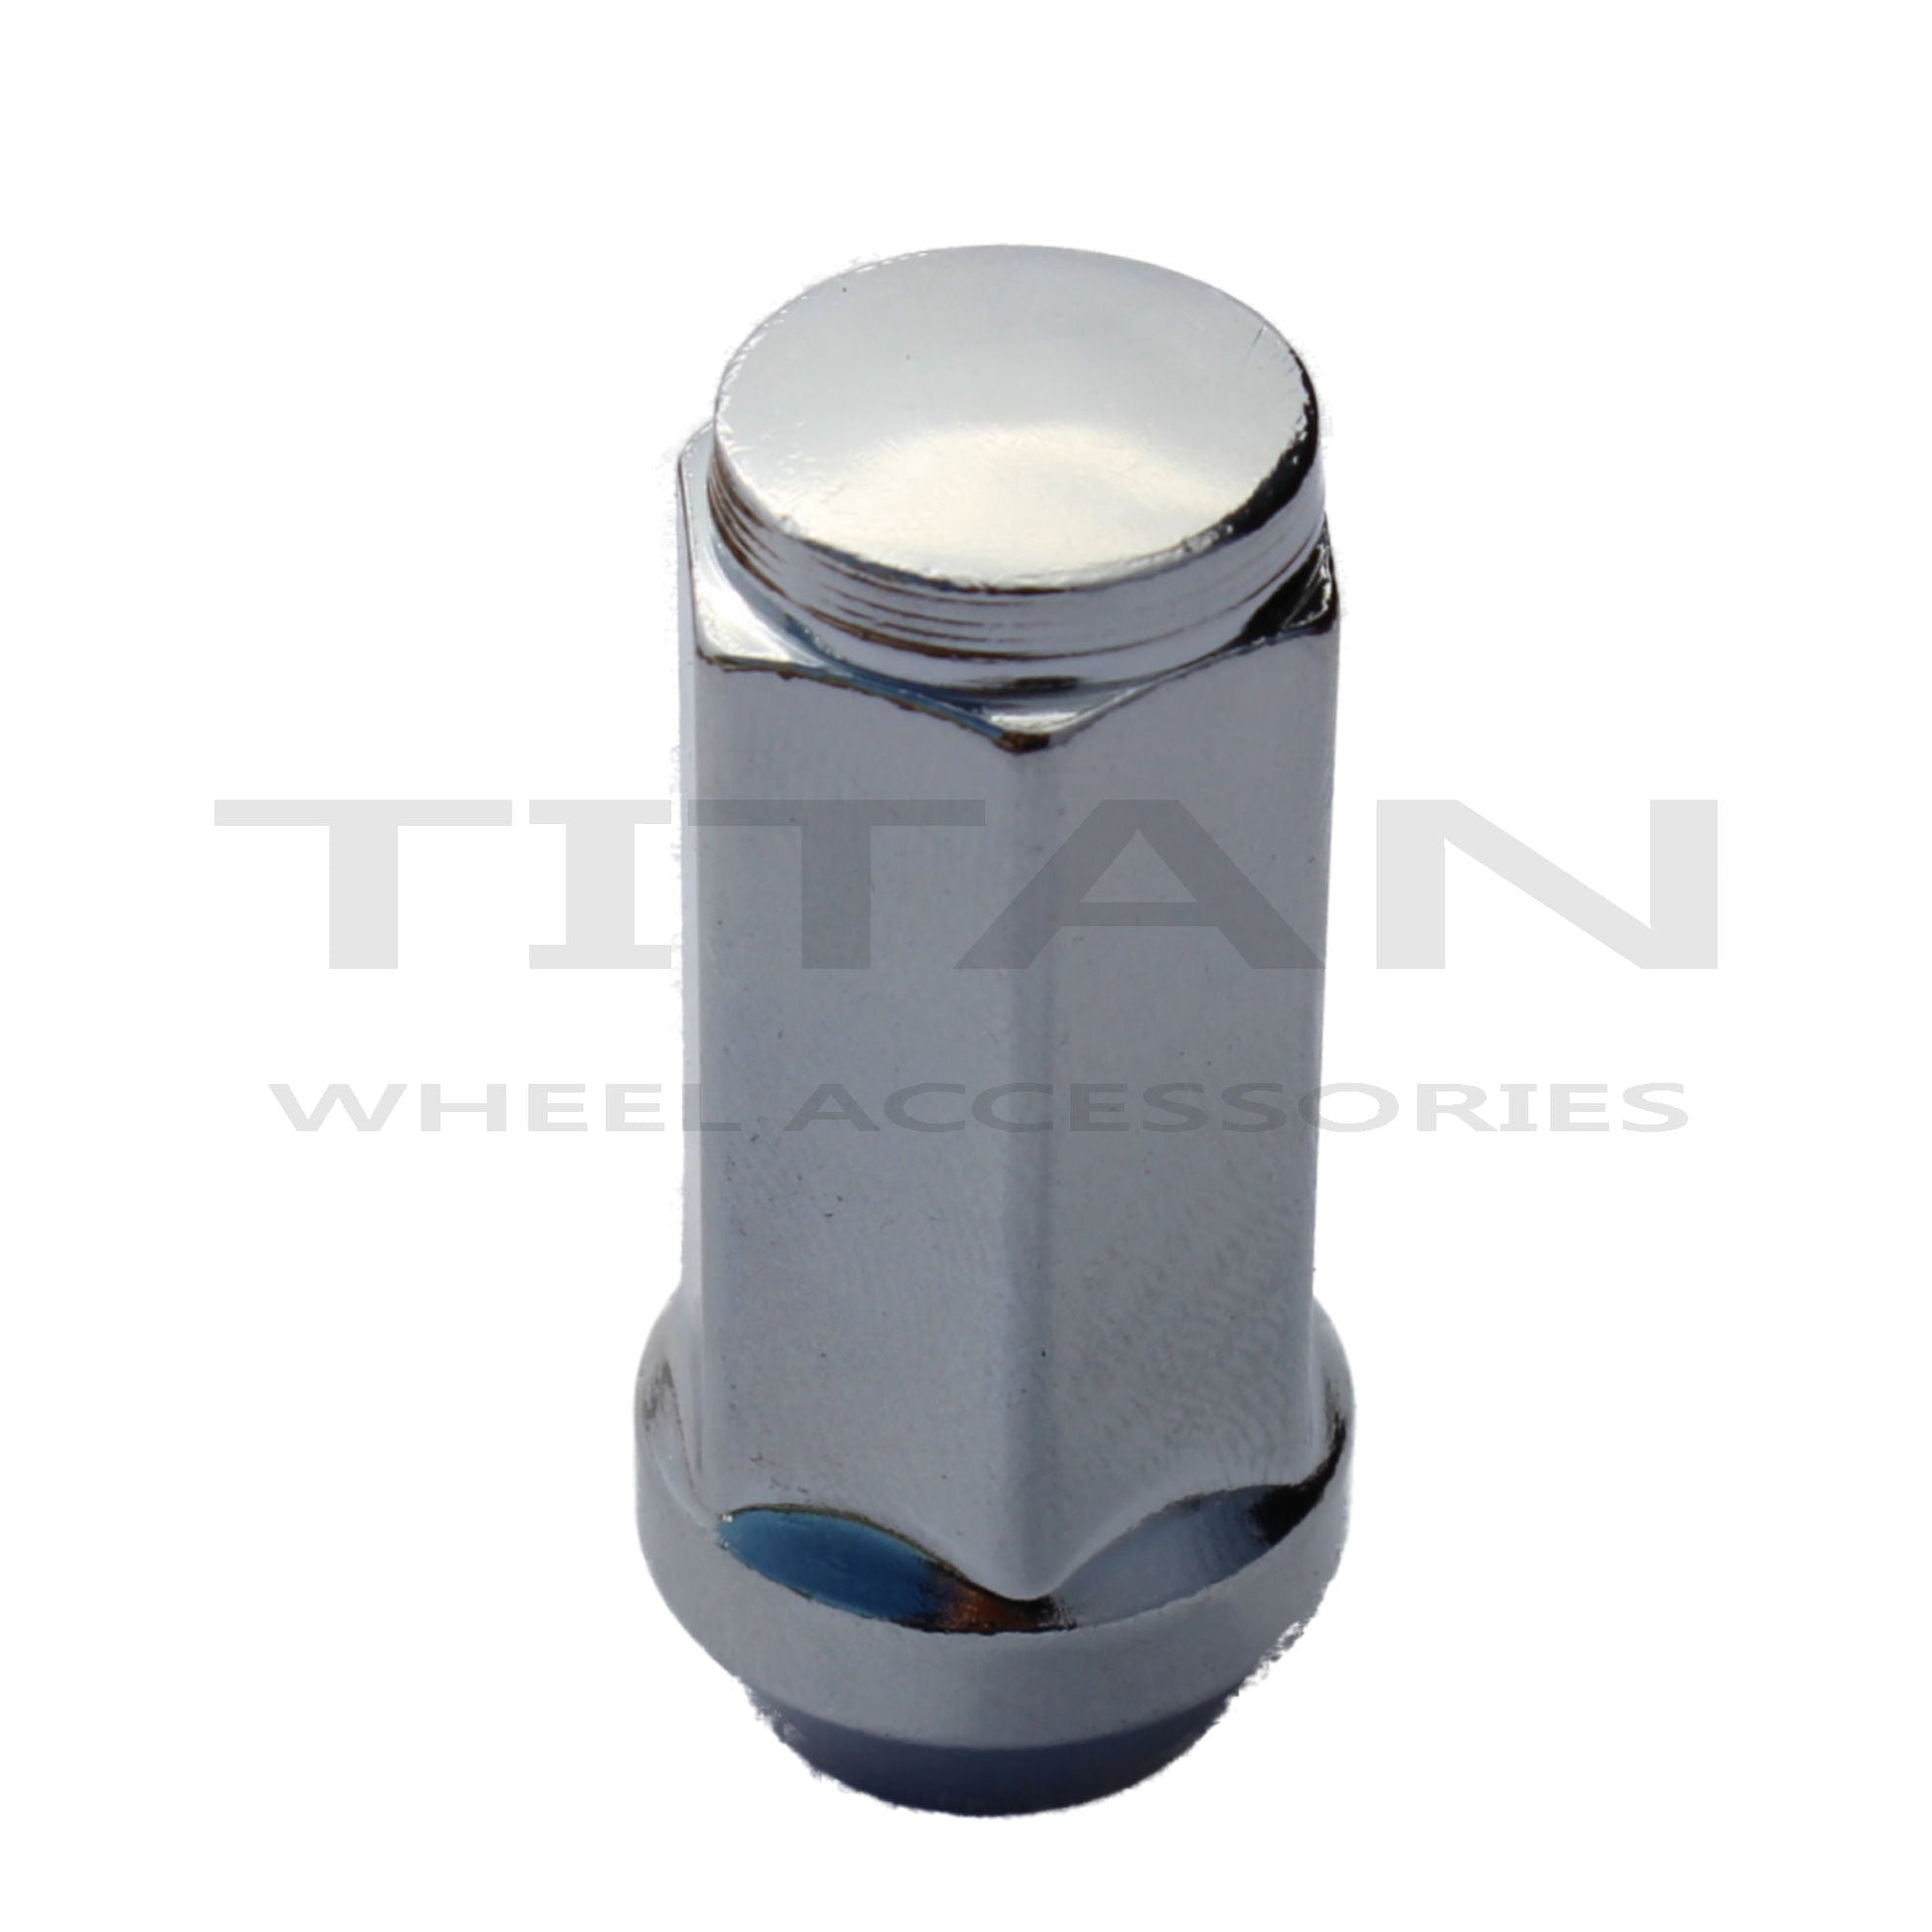 14 x 1.5" Bulge Acorn XL Lug Nuts | 13/16" Head | 1.65" Tall | Chrome Lug Nuts | Titan Wheel Accessories